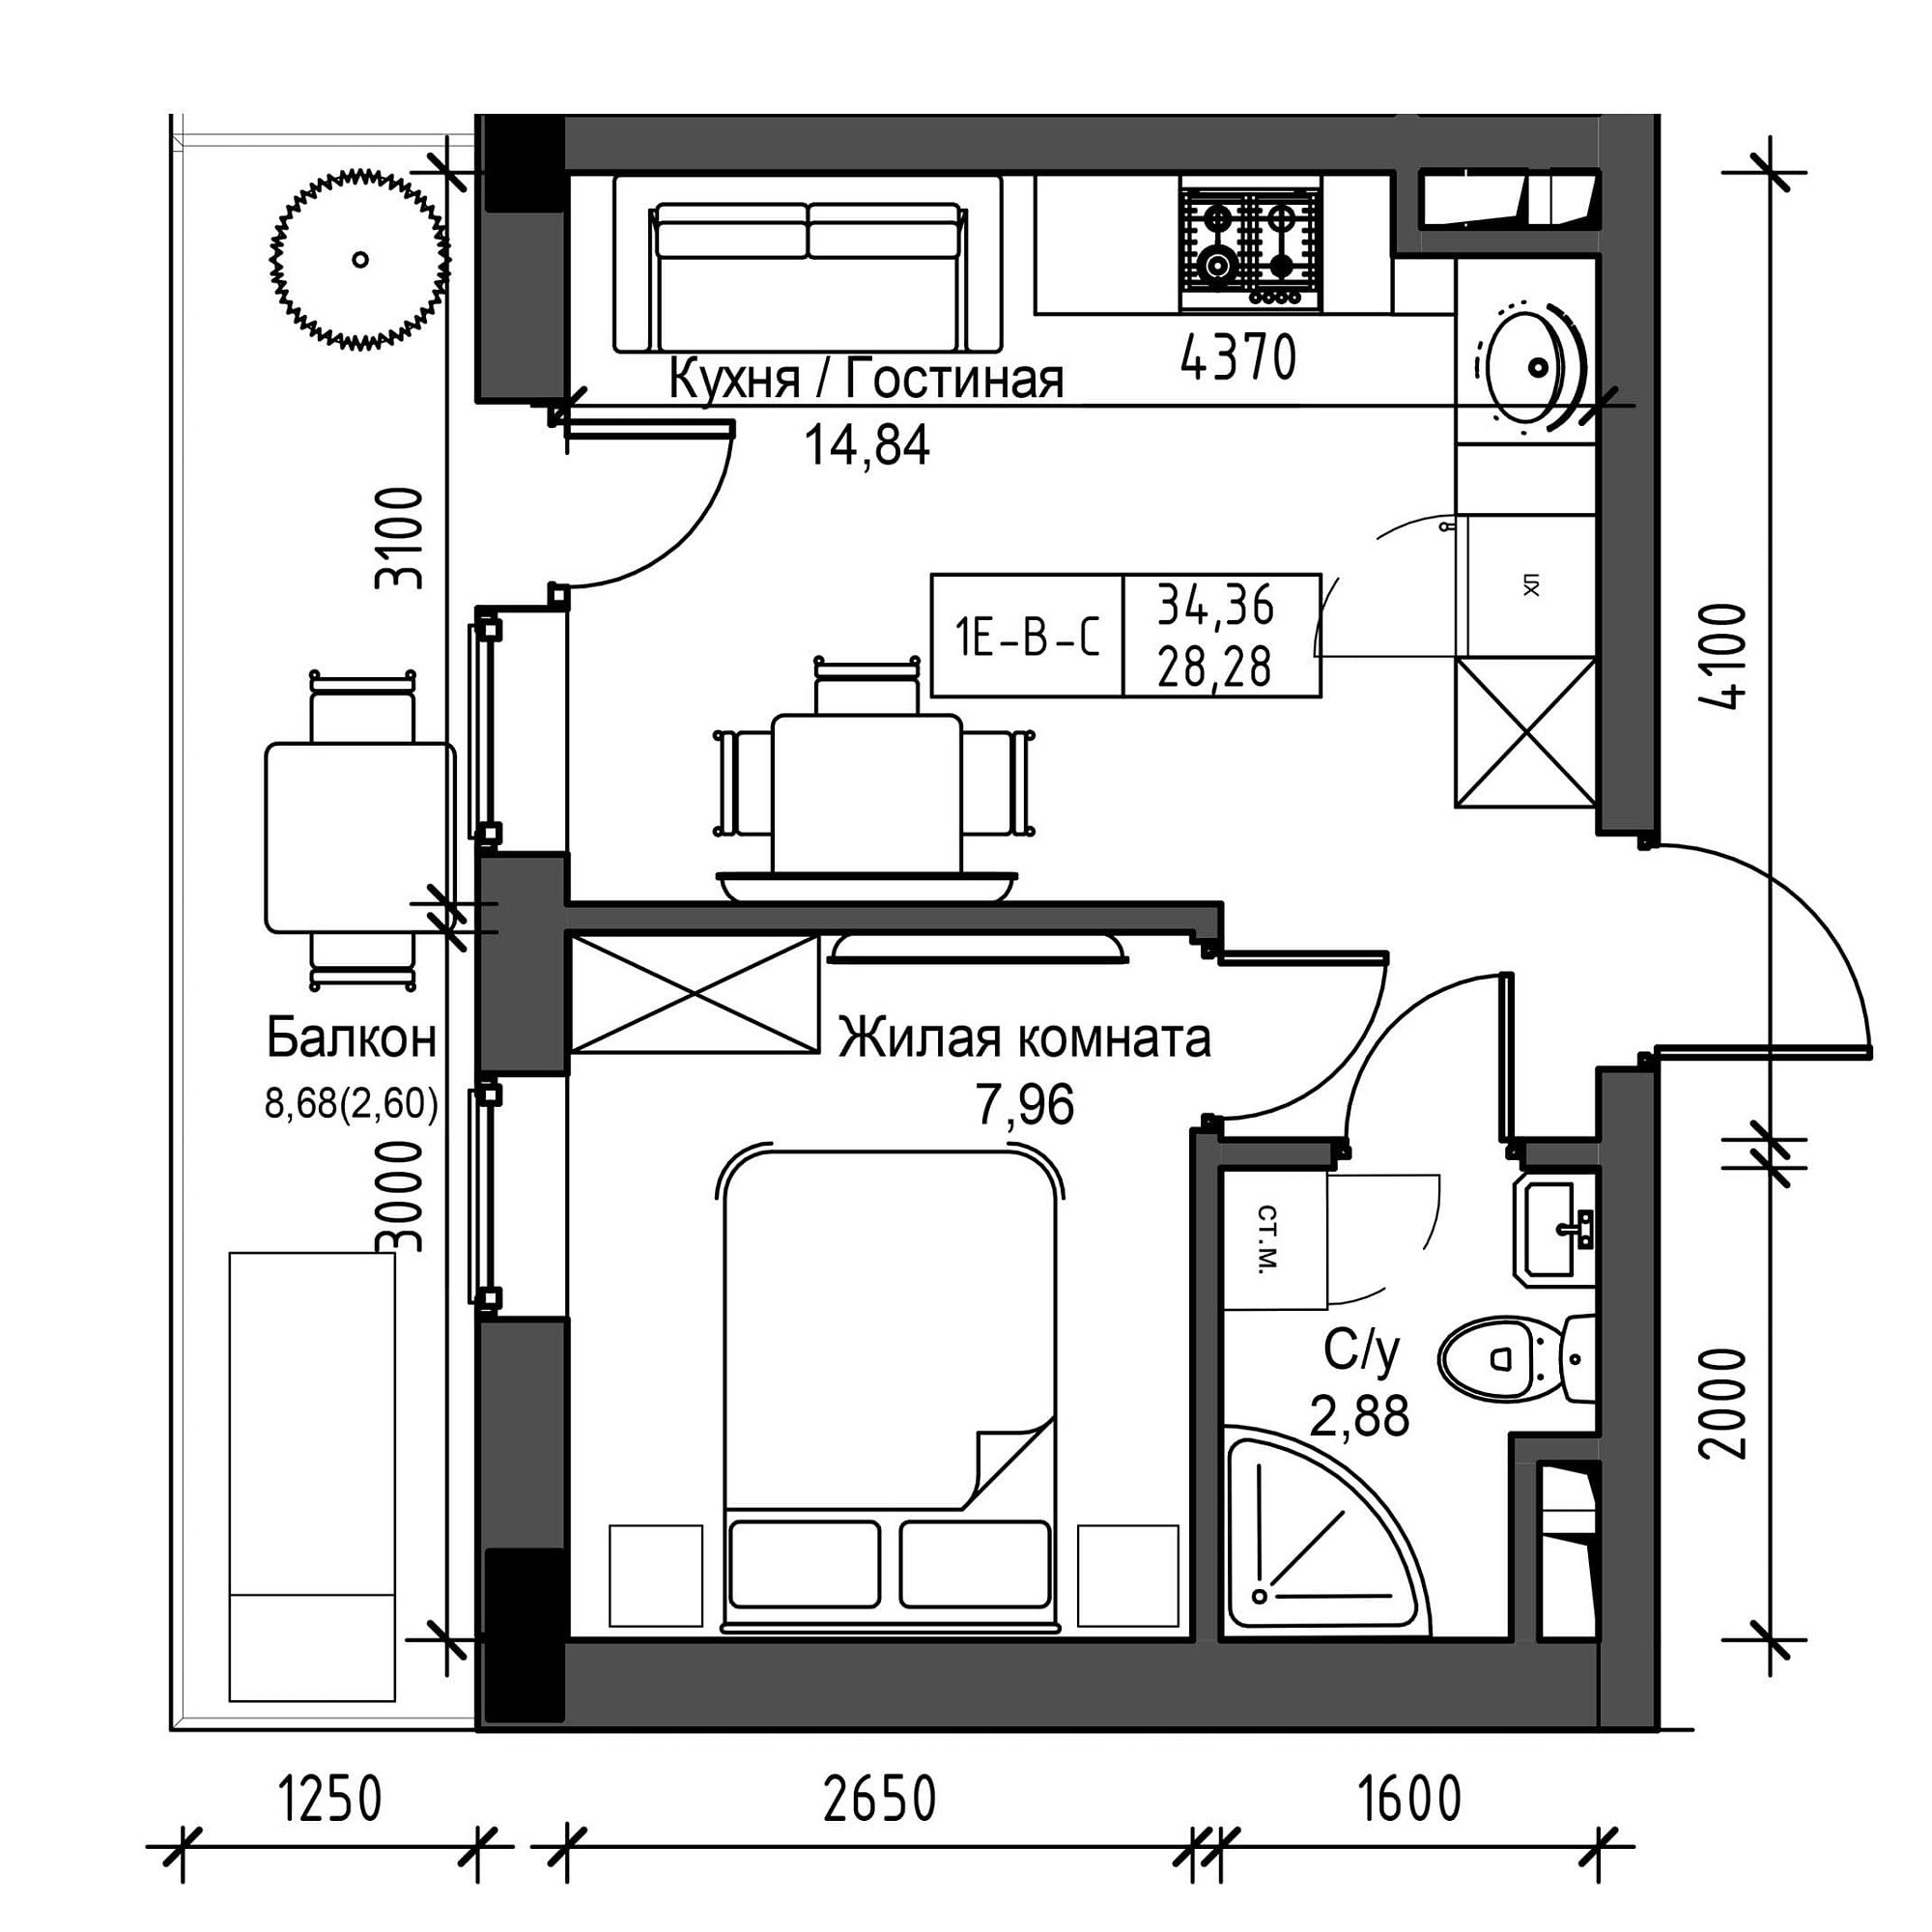 Планування 1-к квартира площею 28.28м2, UM-001-05/0014.